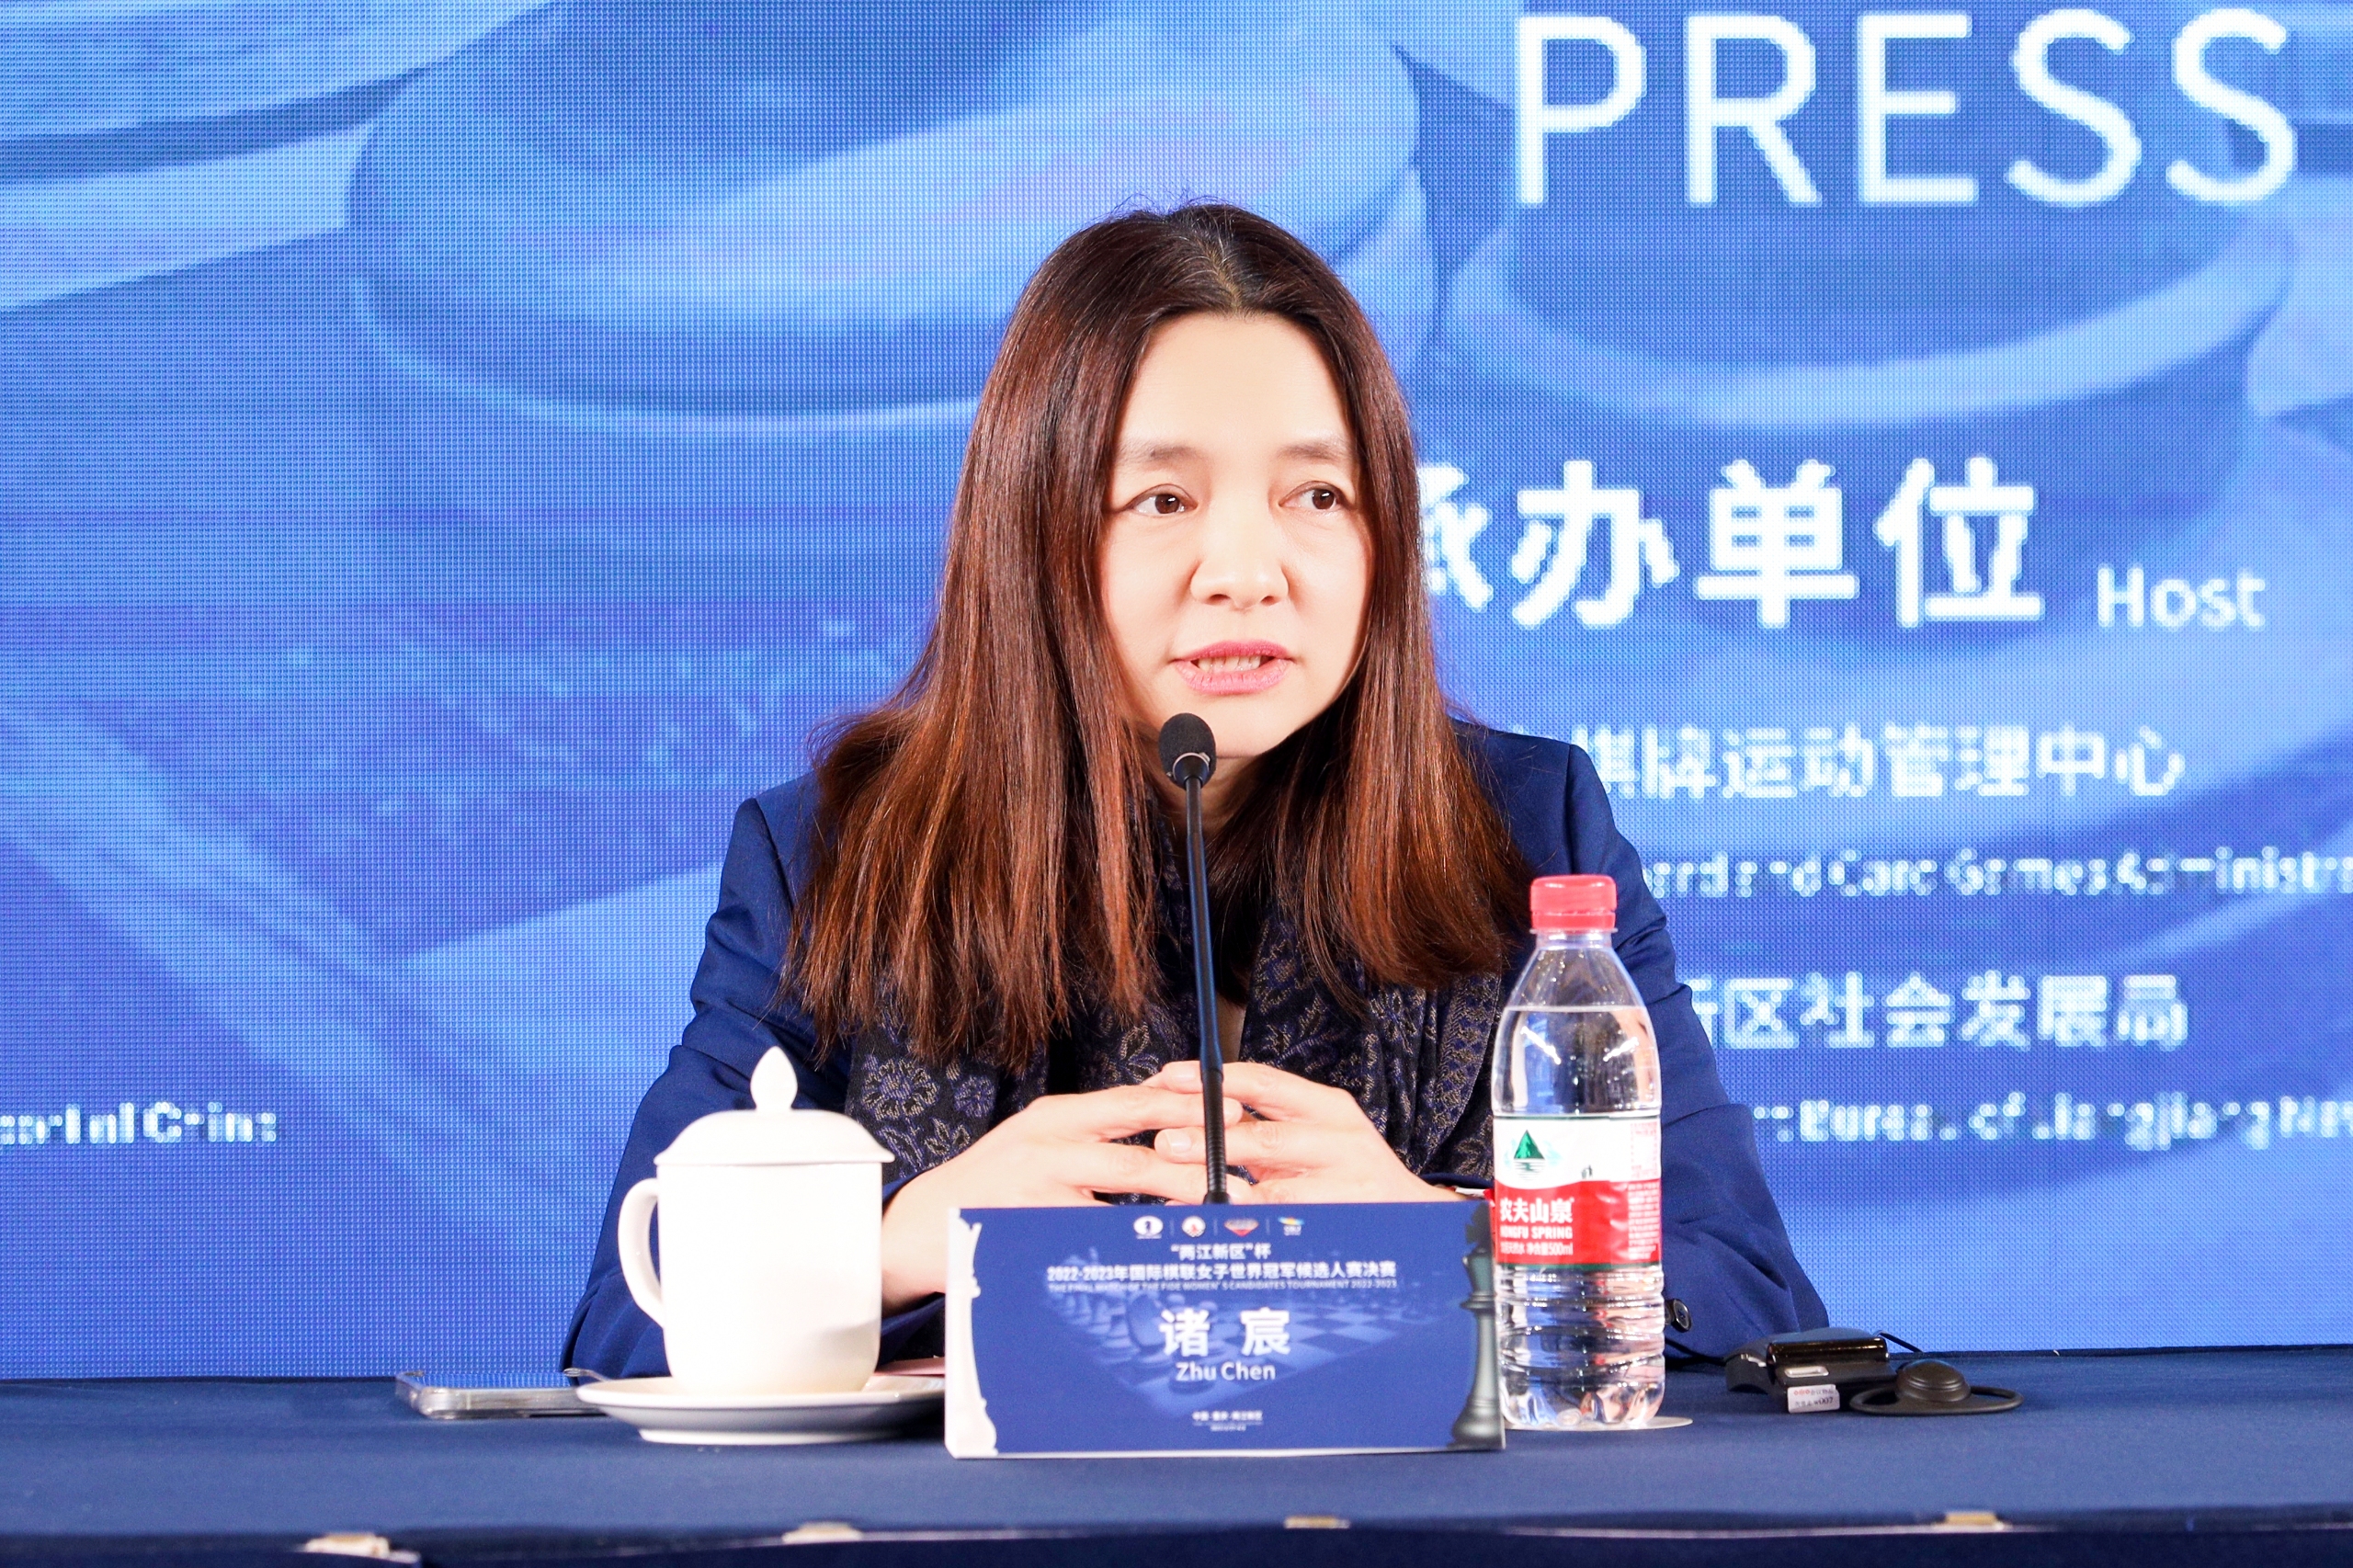 FIDE Women's World Championship Match in Chongqing to Open on July